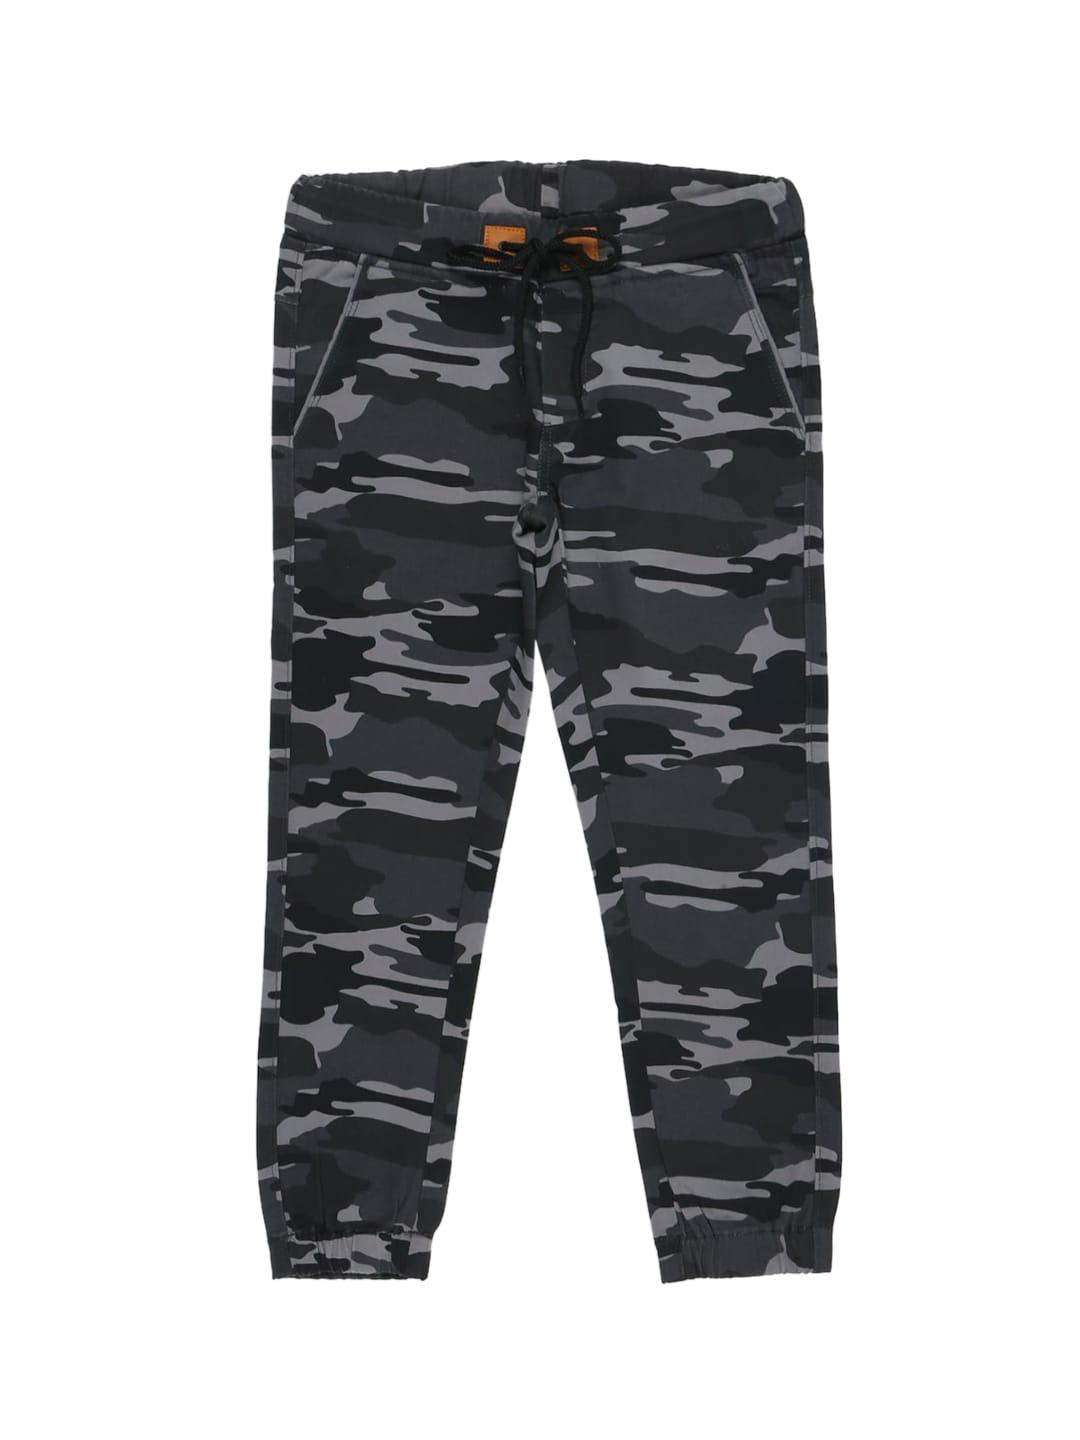 Urbano Juniors Boys Grey & Black Camouflage Printed Slim Fit Joggers Trousers